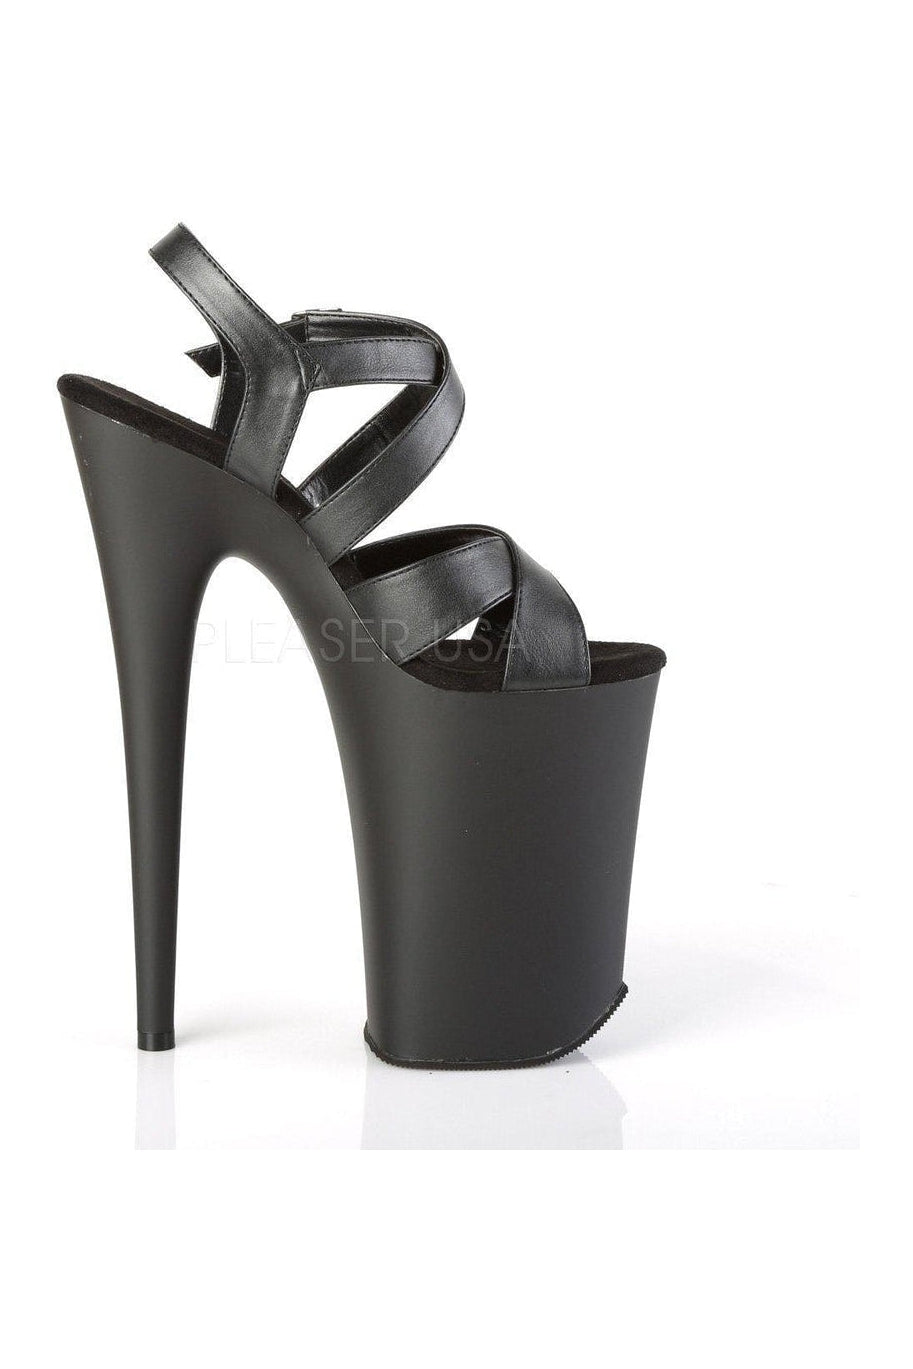 INFINITY-997 Platform Sandals | Black Faux Leather-Sandals- Stripper Shoes at SEXYSHOES.COM